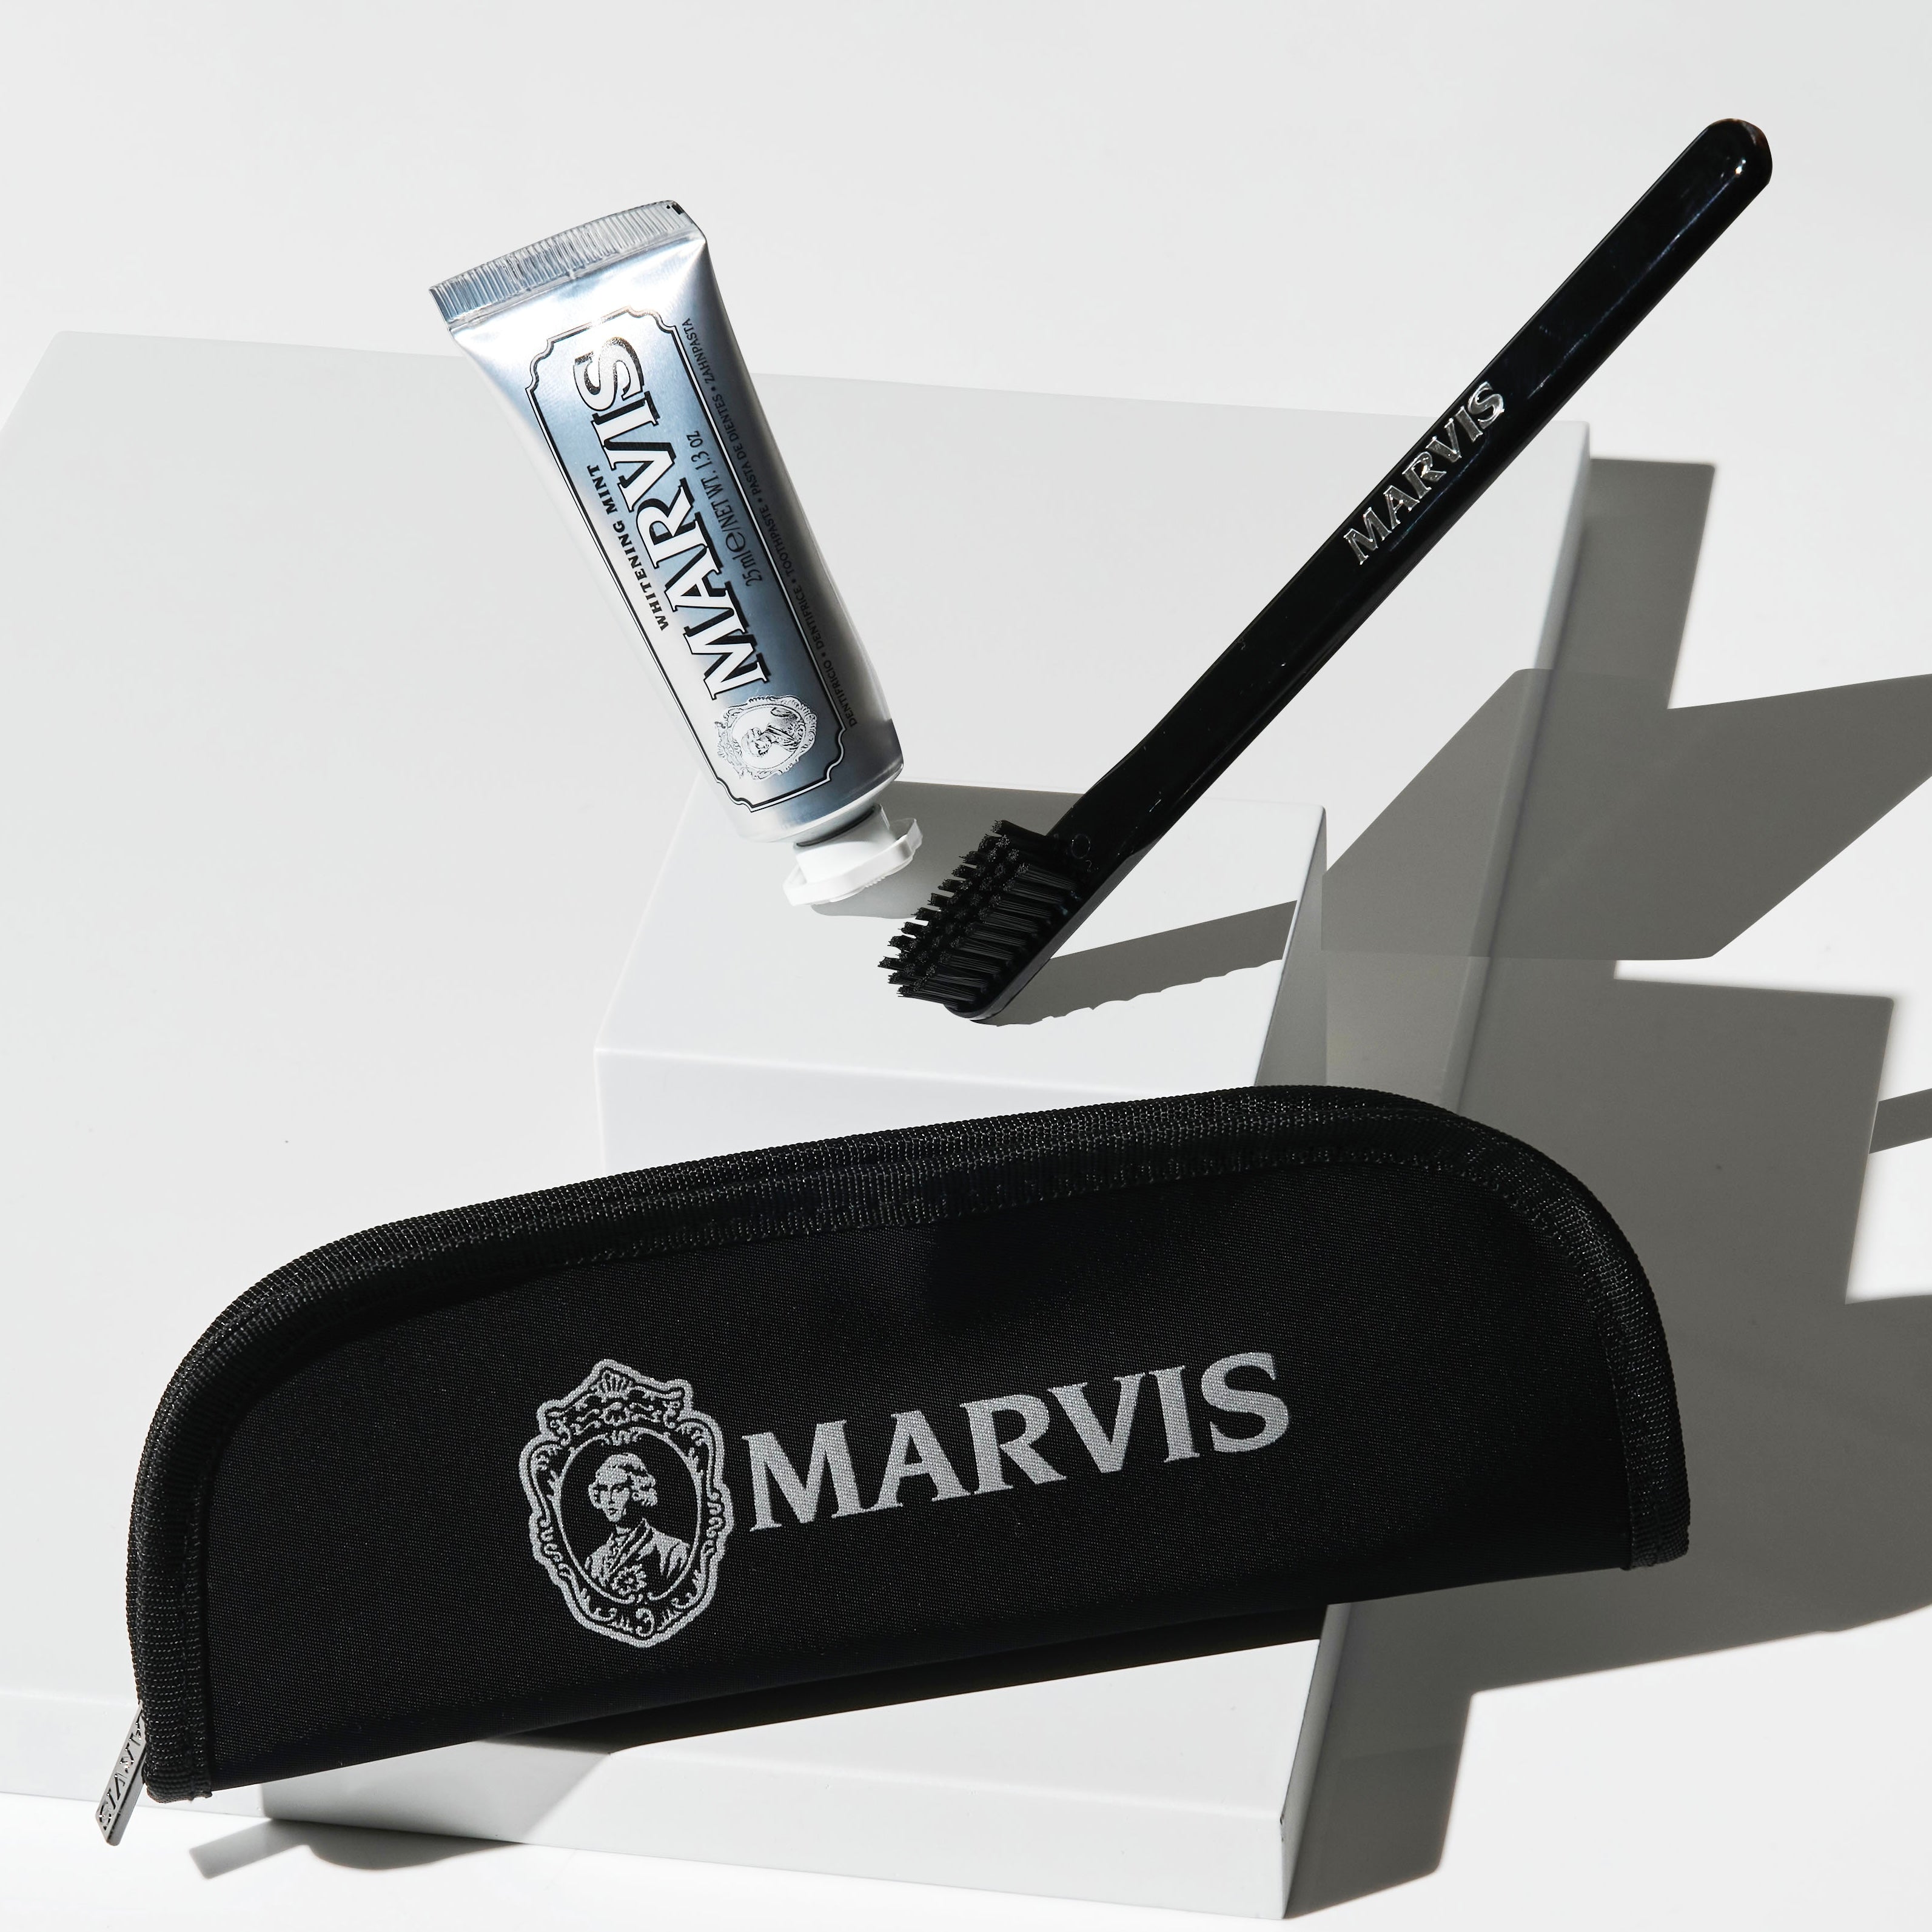 MARVIS歯ブラシセット - 歯ブラシ